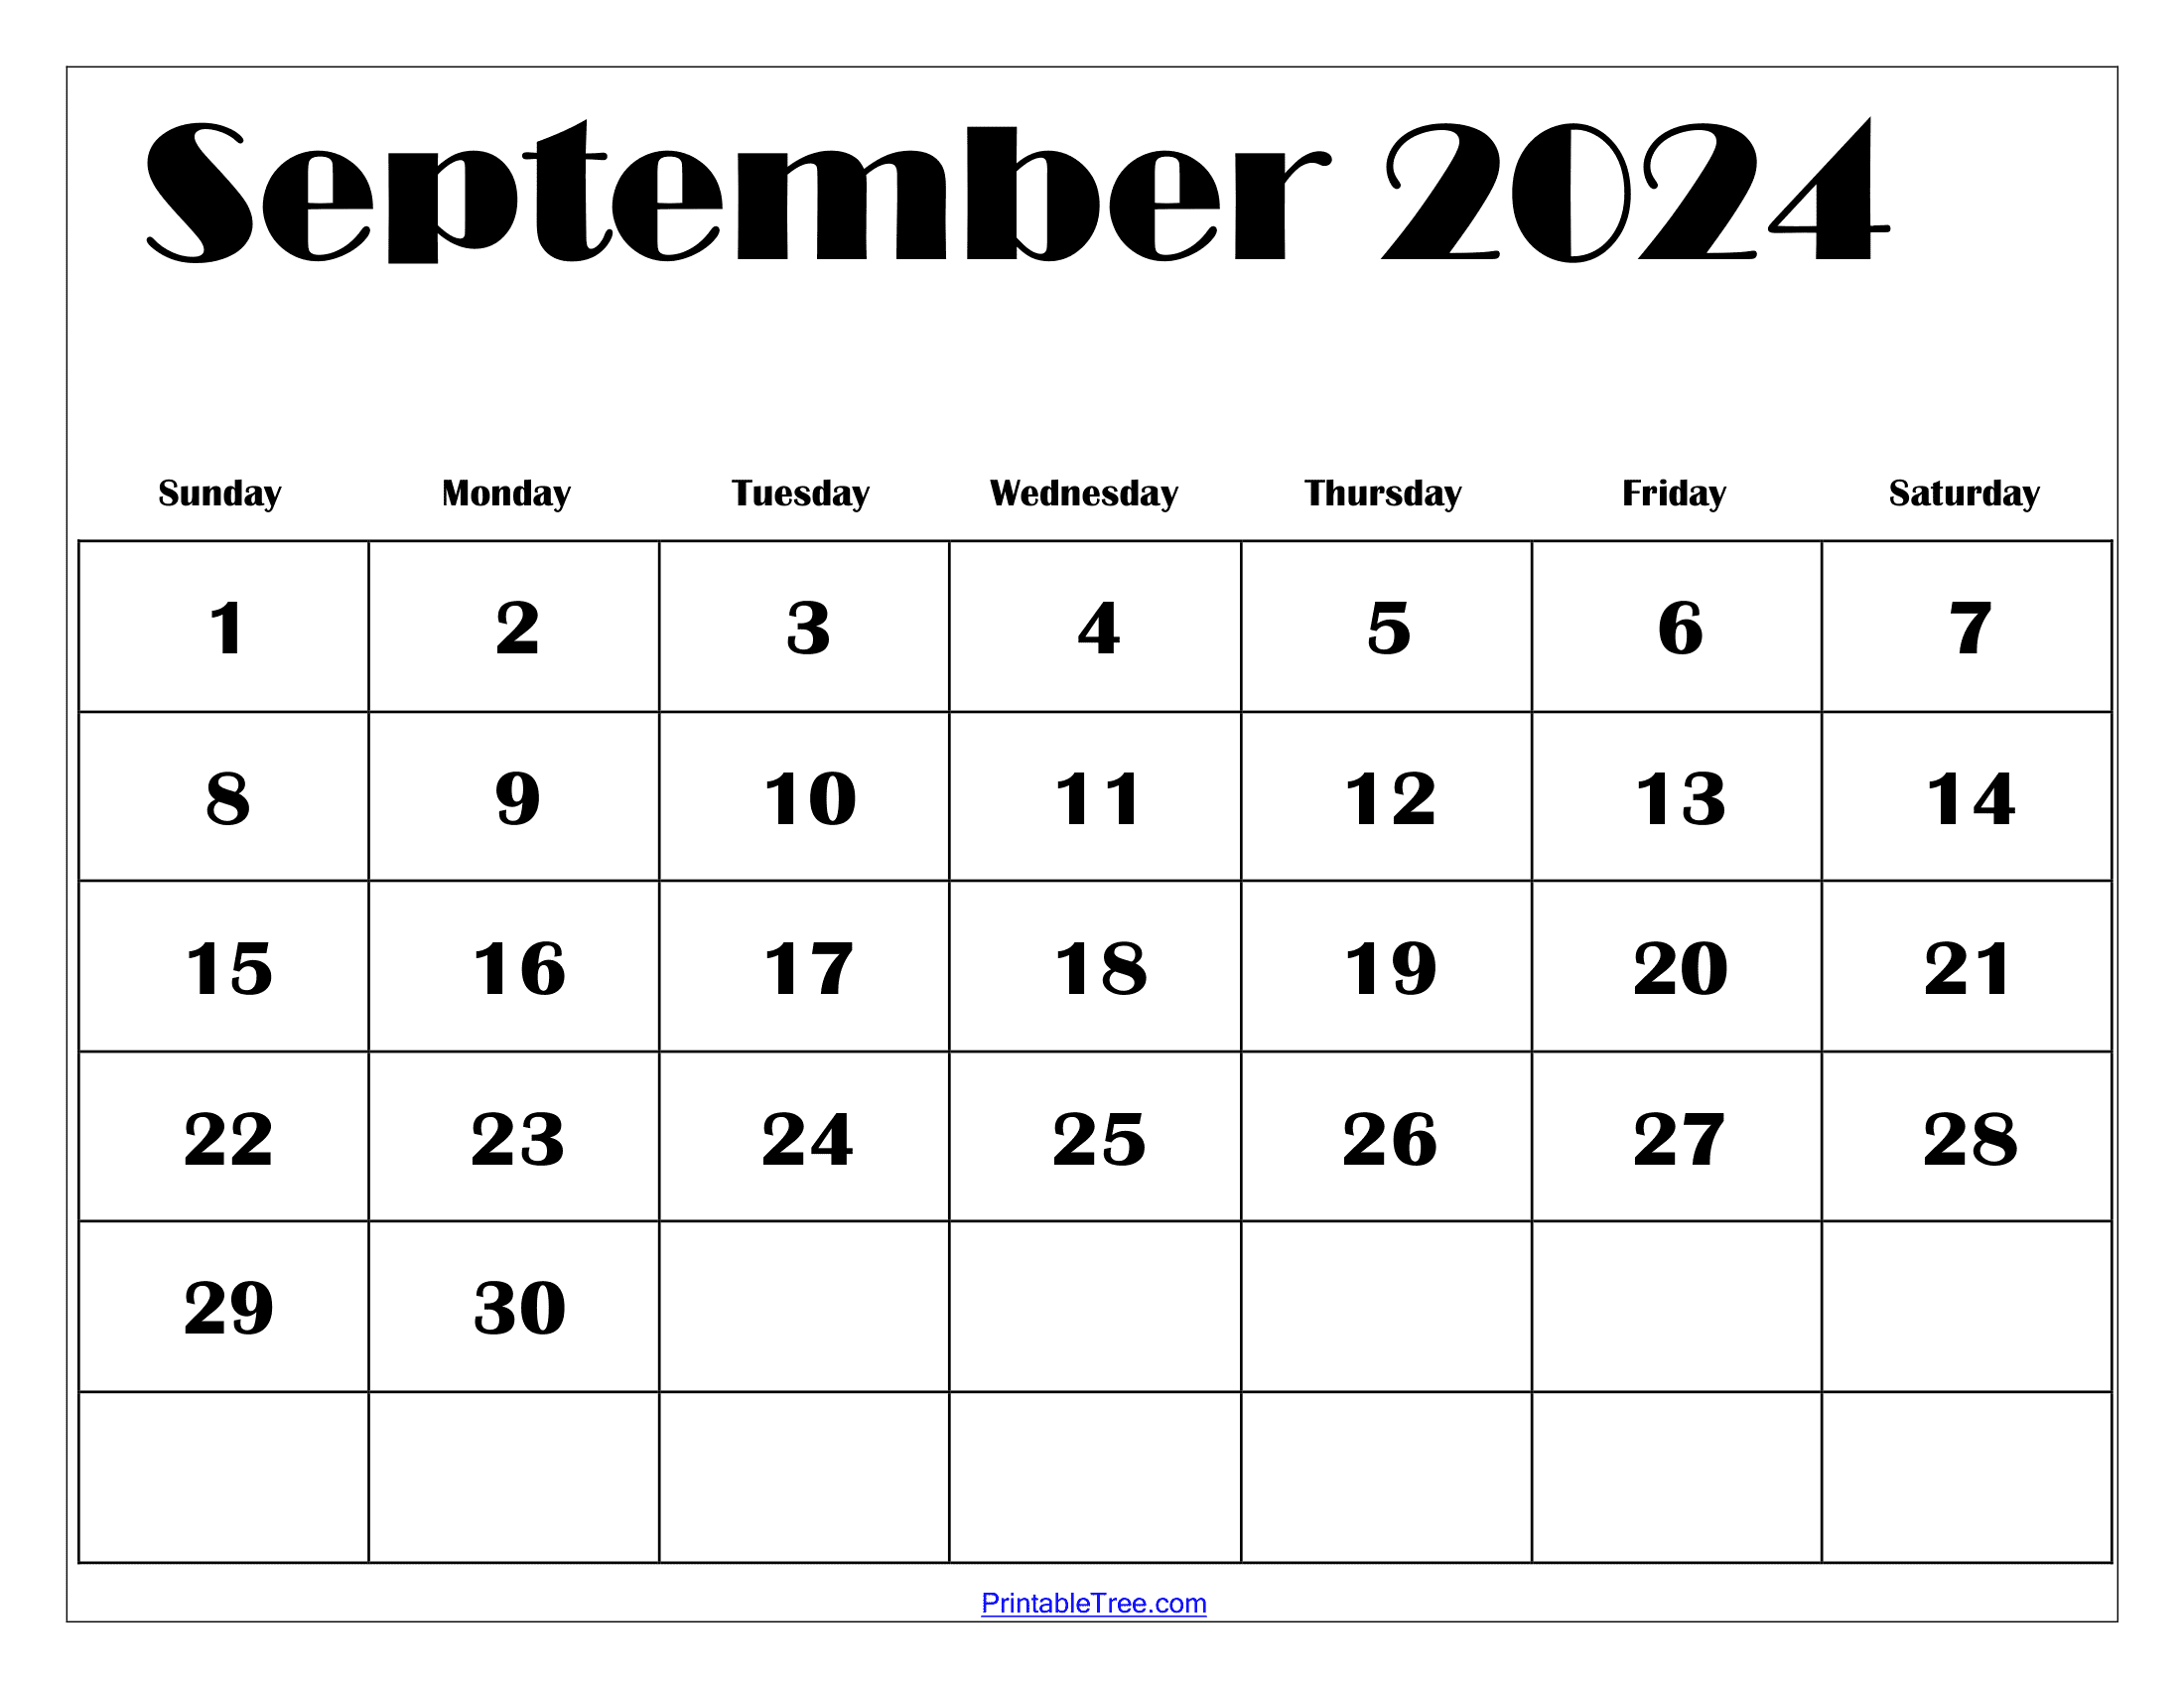 September 2024 Calendar Printable Pdf With Holidays for September 2024 Calendar Free Printable